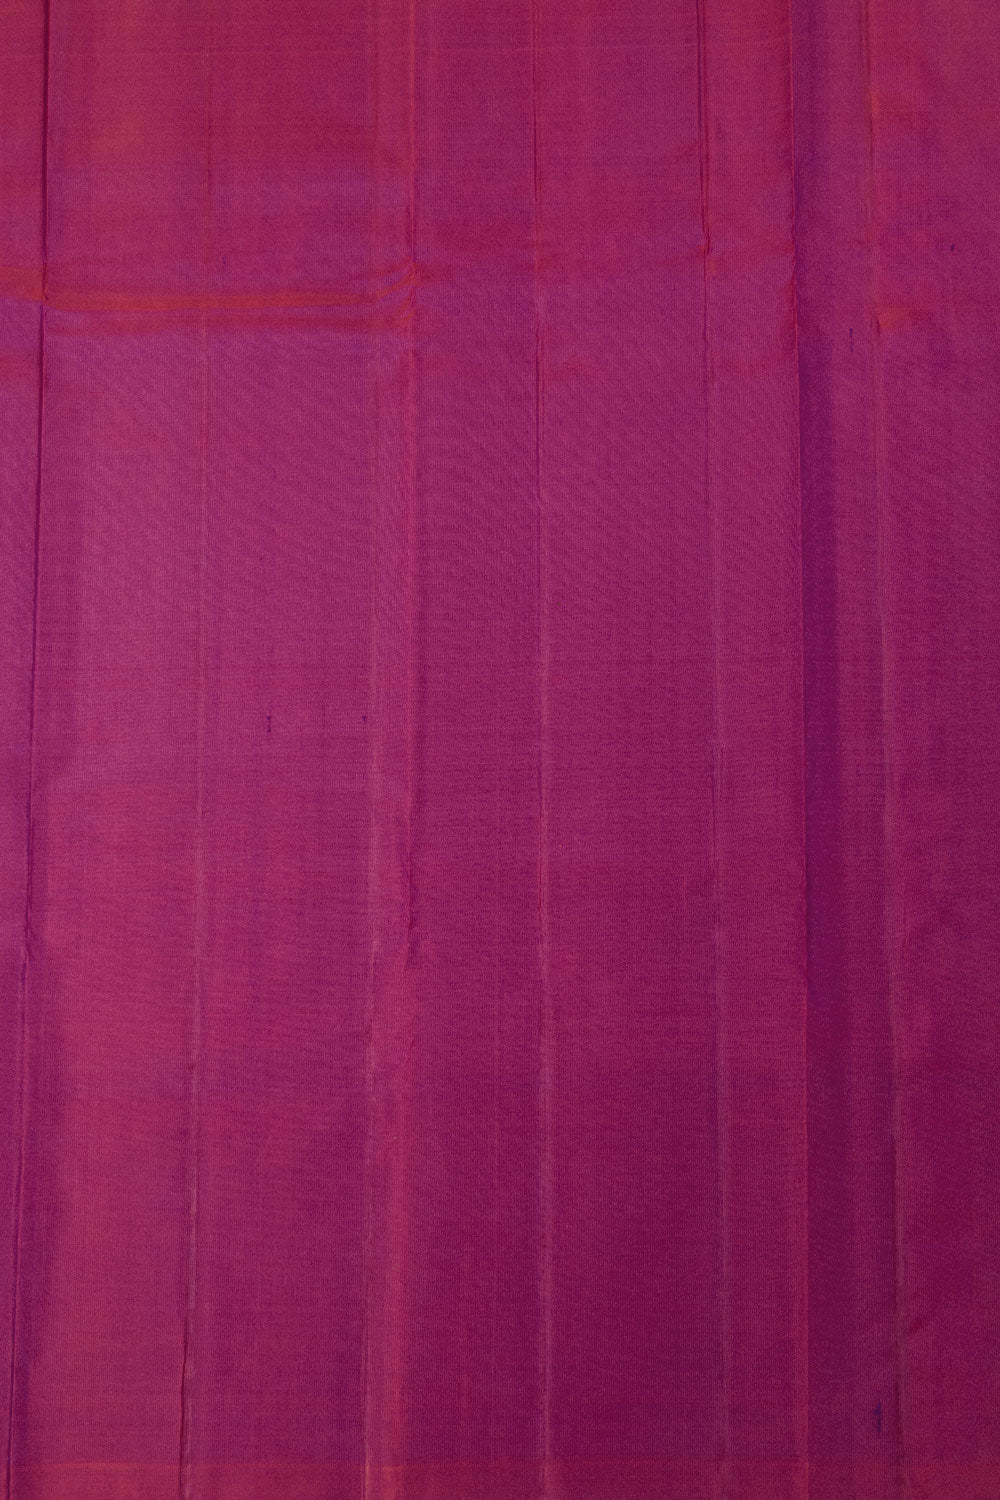 Dual Shade Cherry Pink Handloom Kanjivaram Soft Silk Saree 10063261